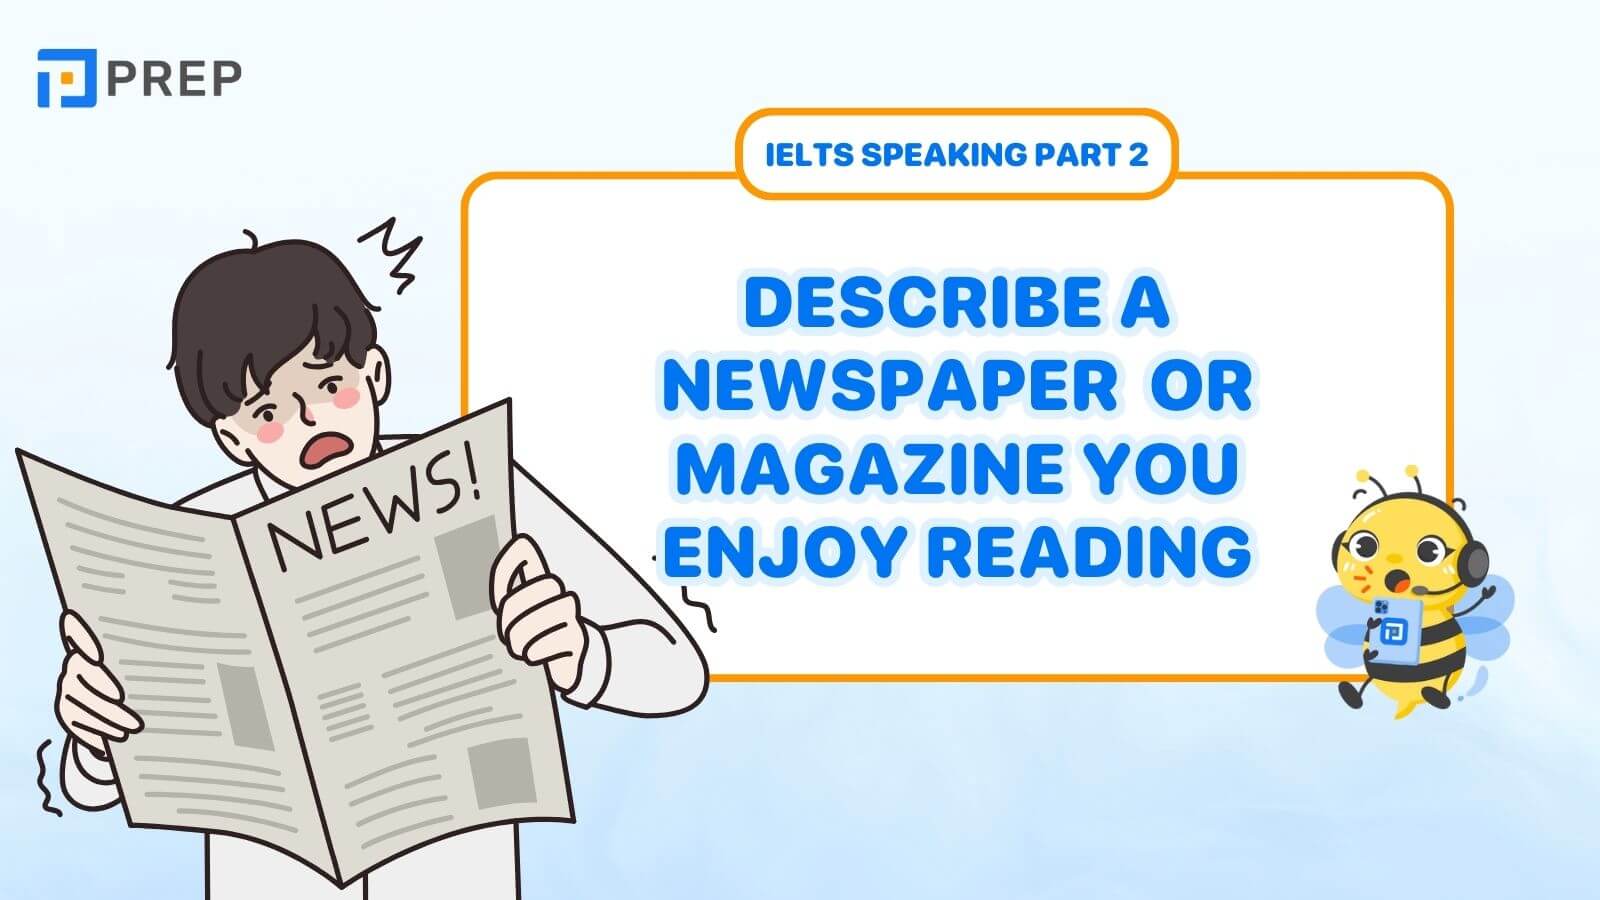 Describe a newspaper or magazine you enjoy reading